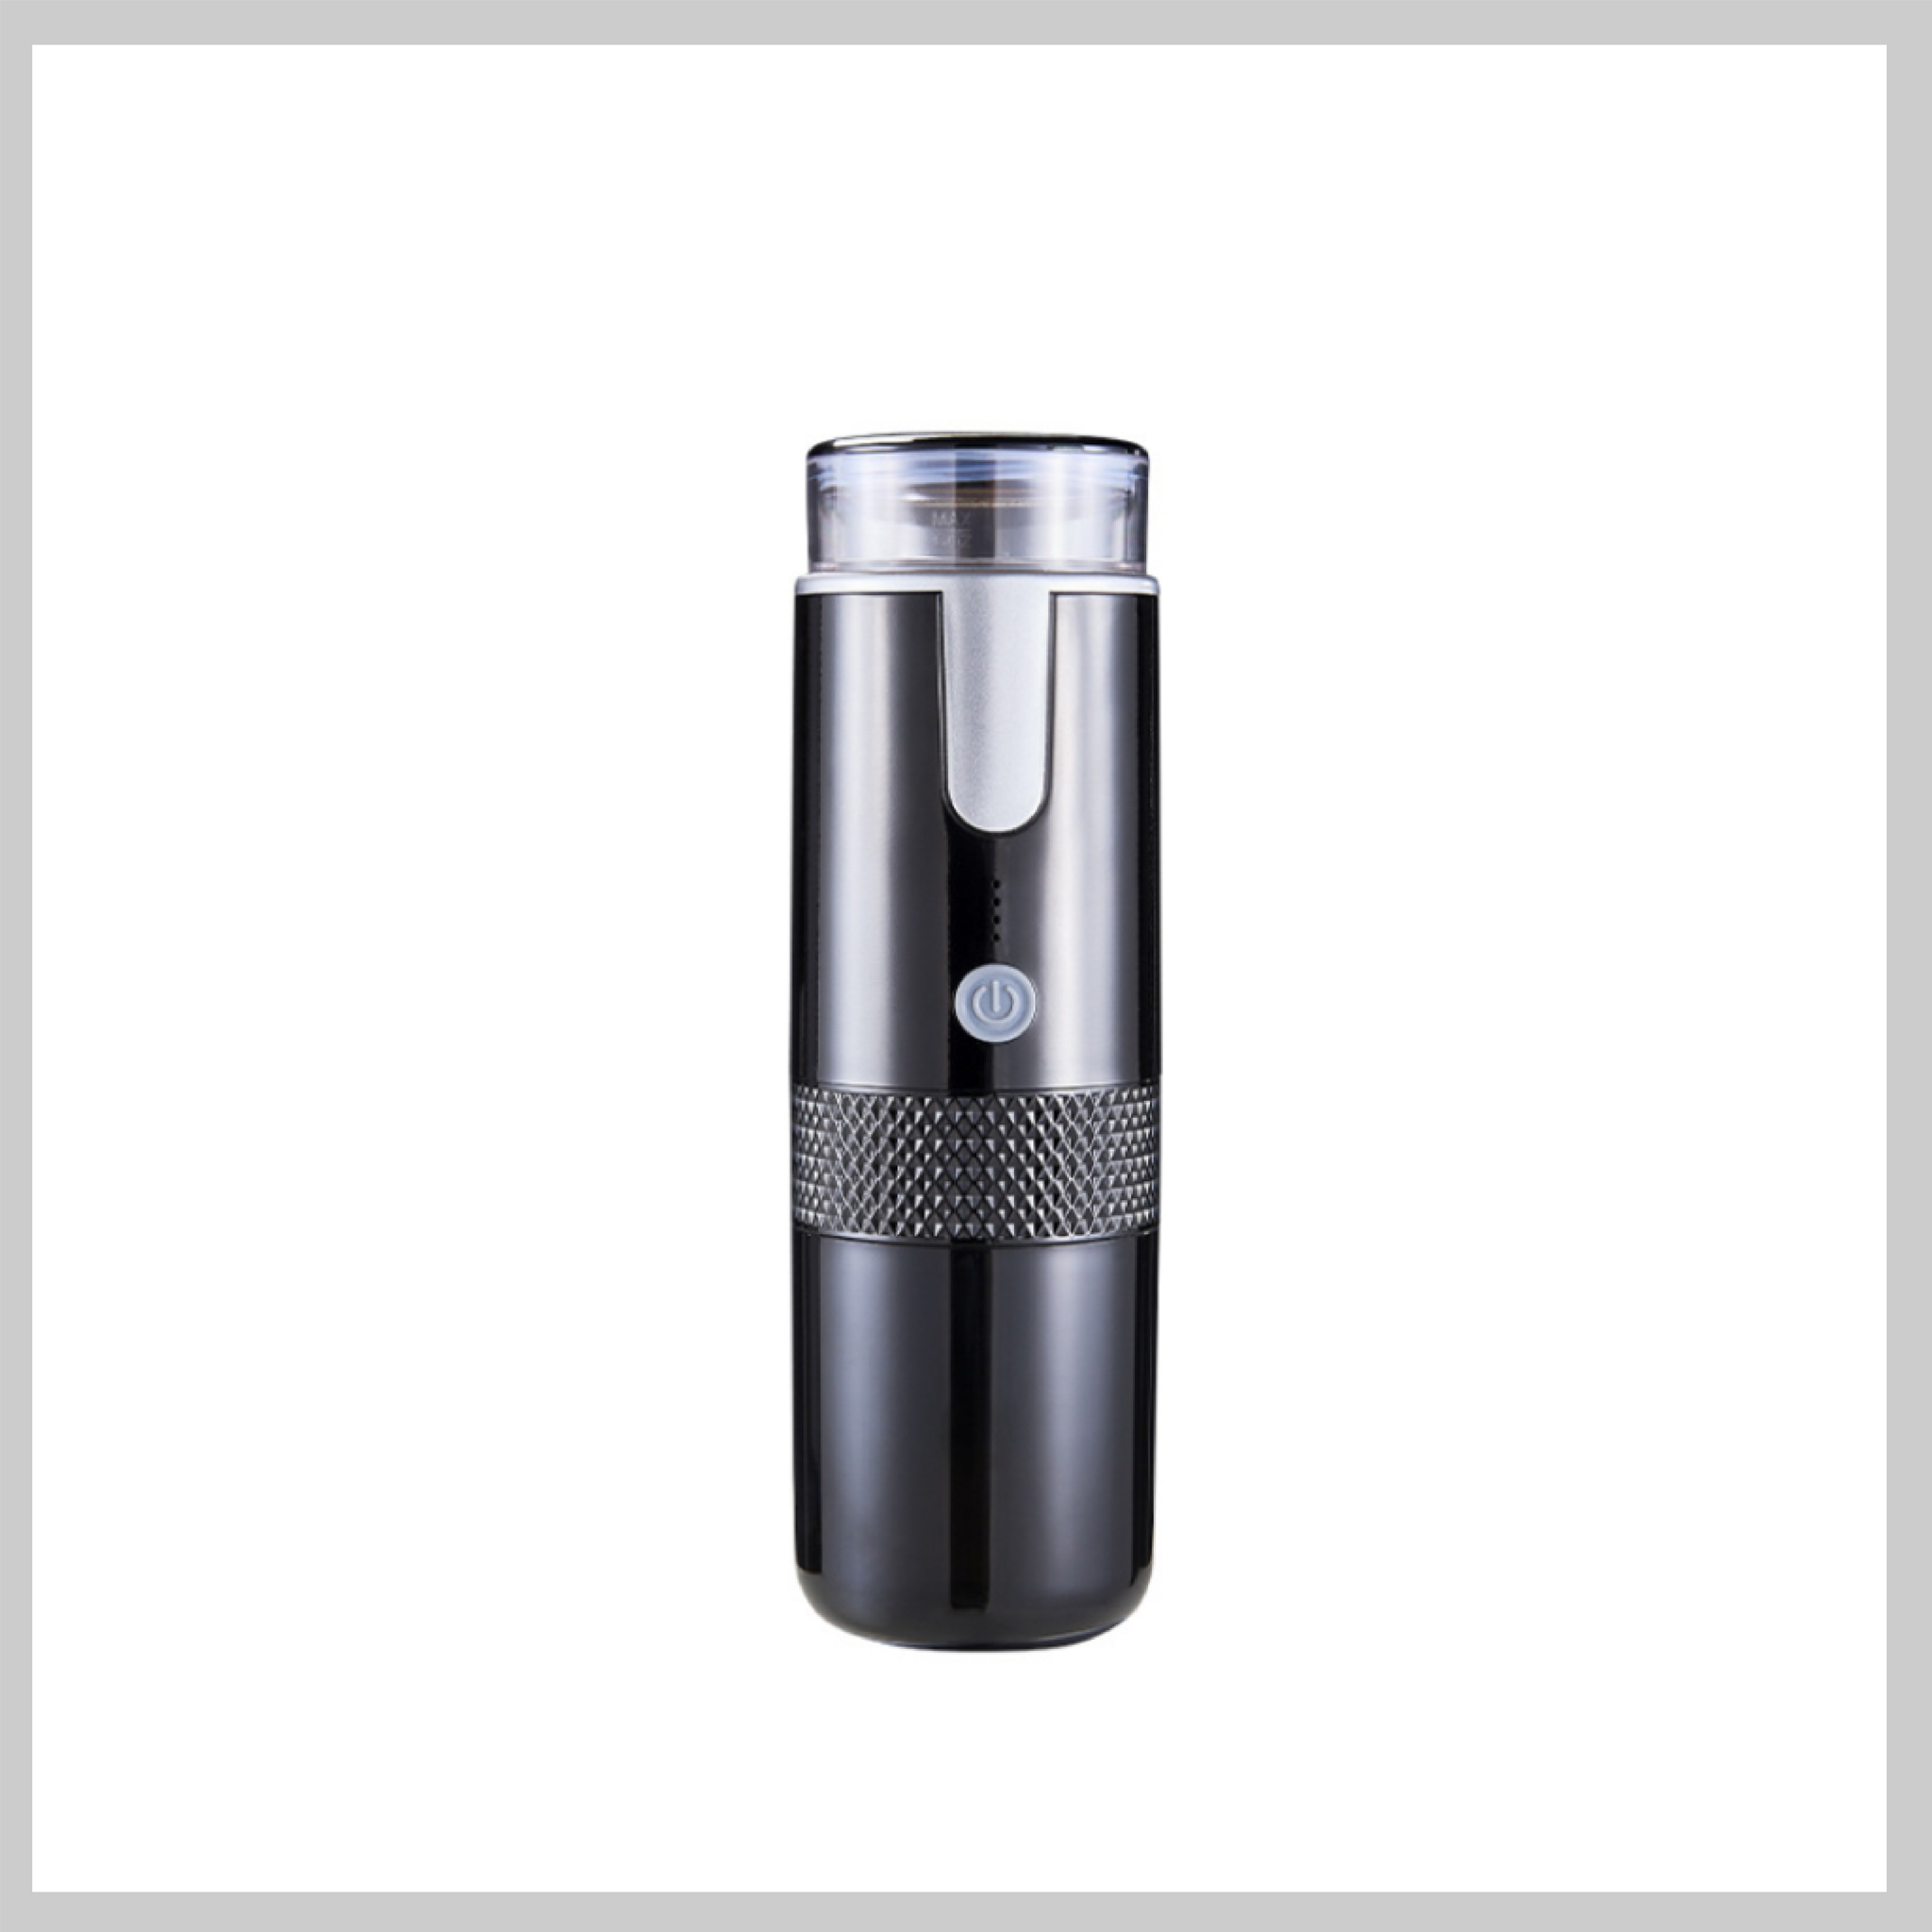 Fully Automatic Portable Wireless Coffee Machine (Black)